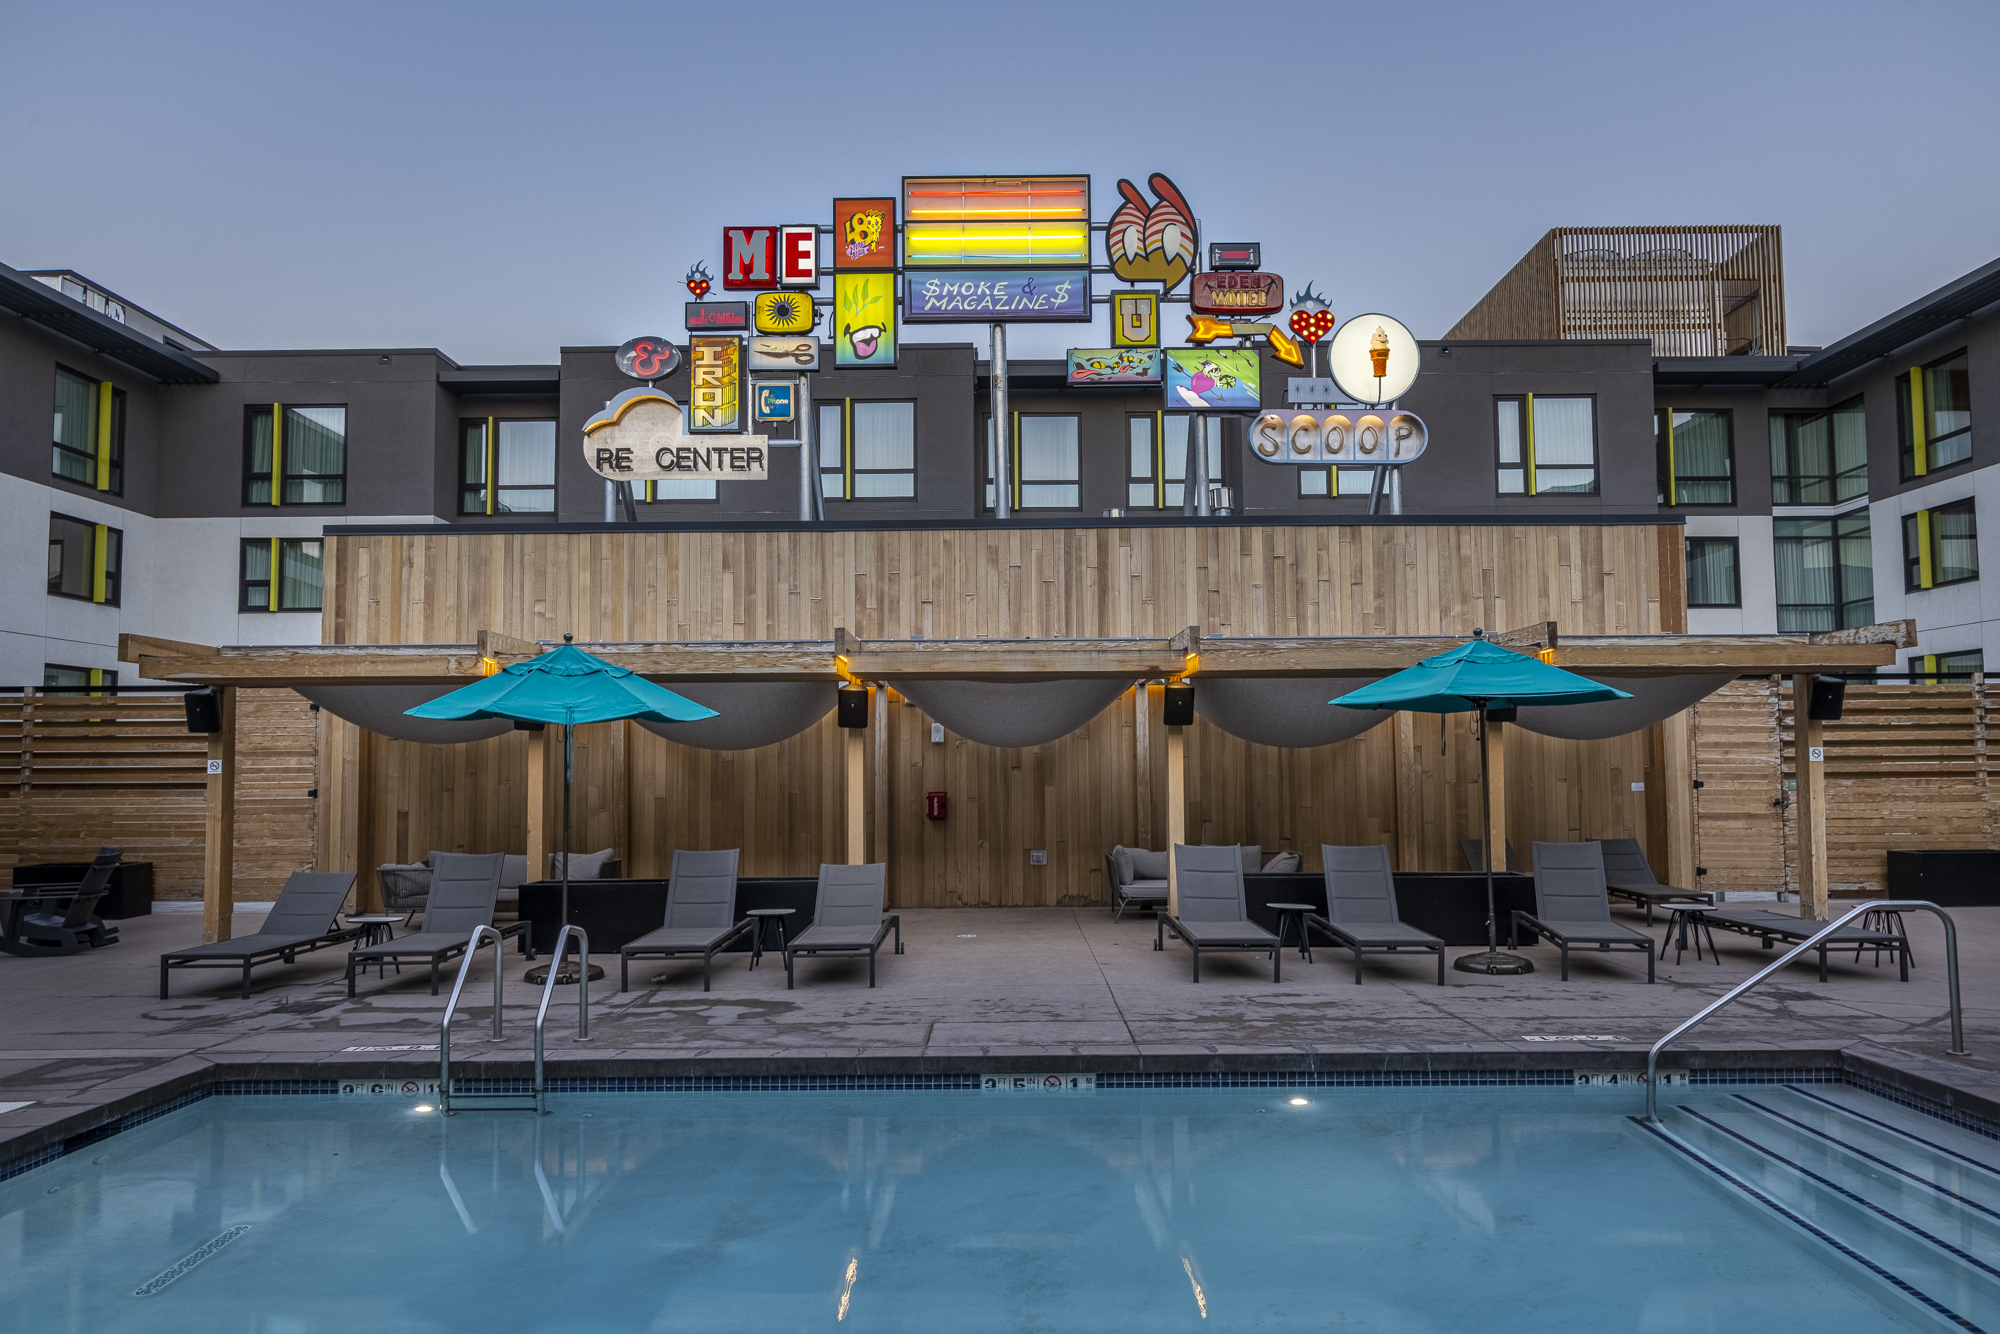 EMBASSY SUITES BY HILTON LOS ANGELES GLENDALE - Hotel Reviews, Photos, Rate  Comparison - Tripadvisor